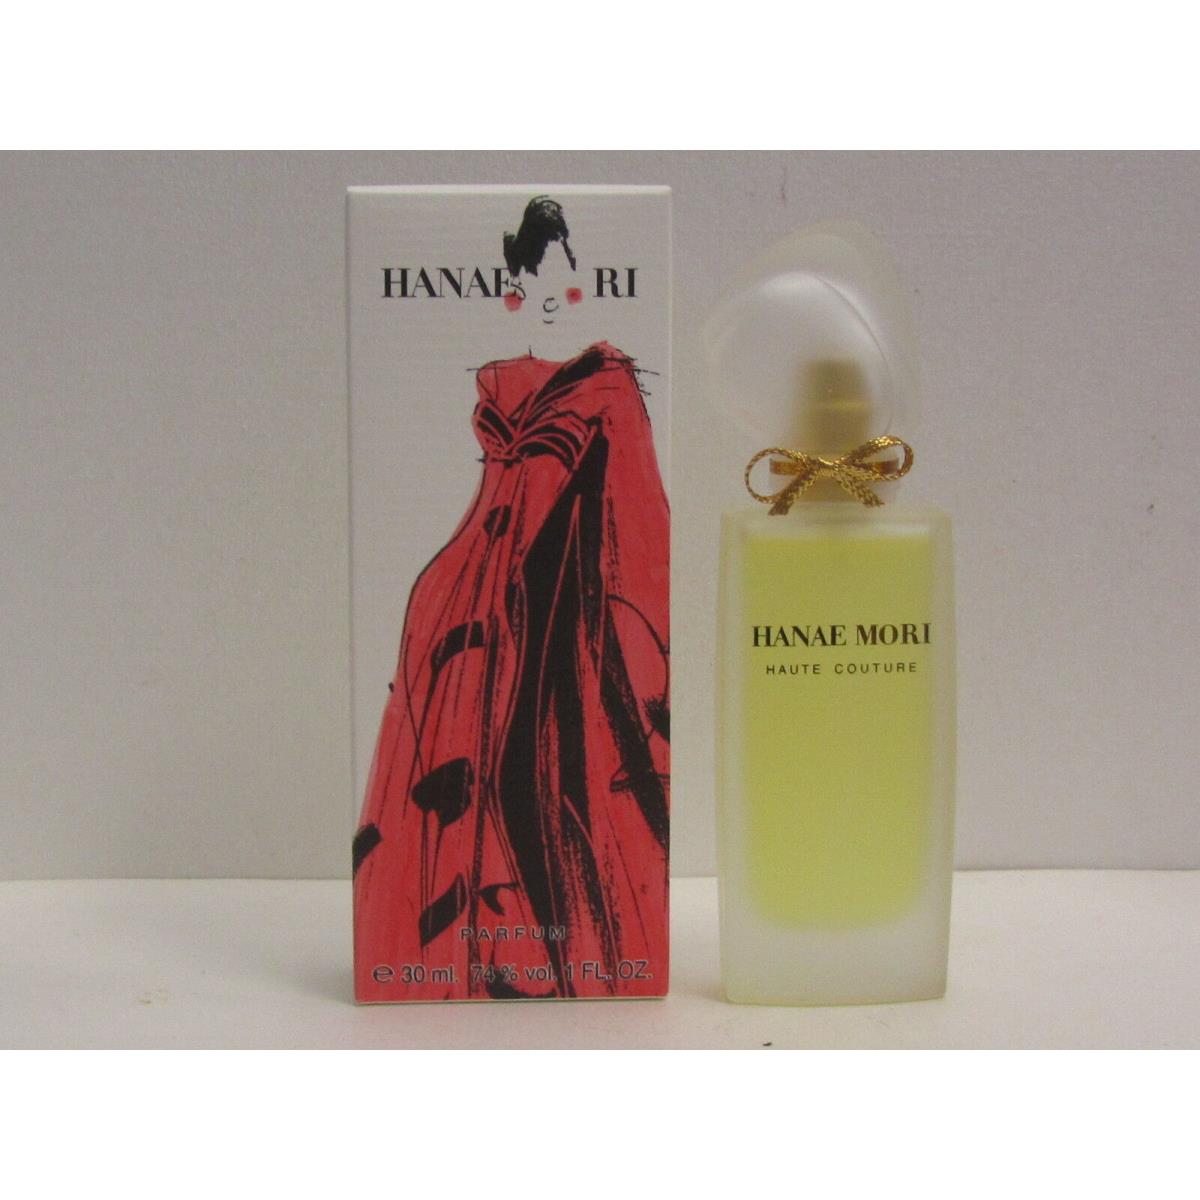 Hanae Mori Haute Couture For Women 1 oz Parfum Spray